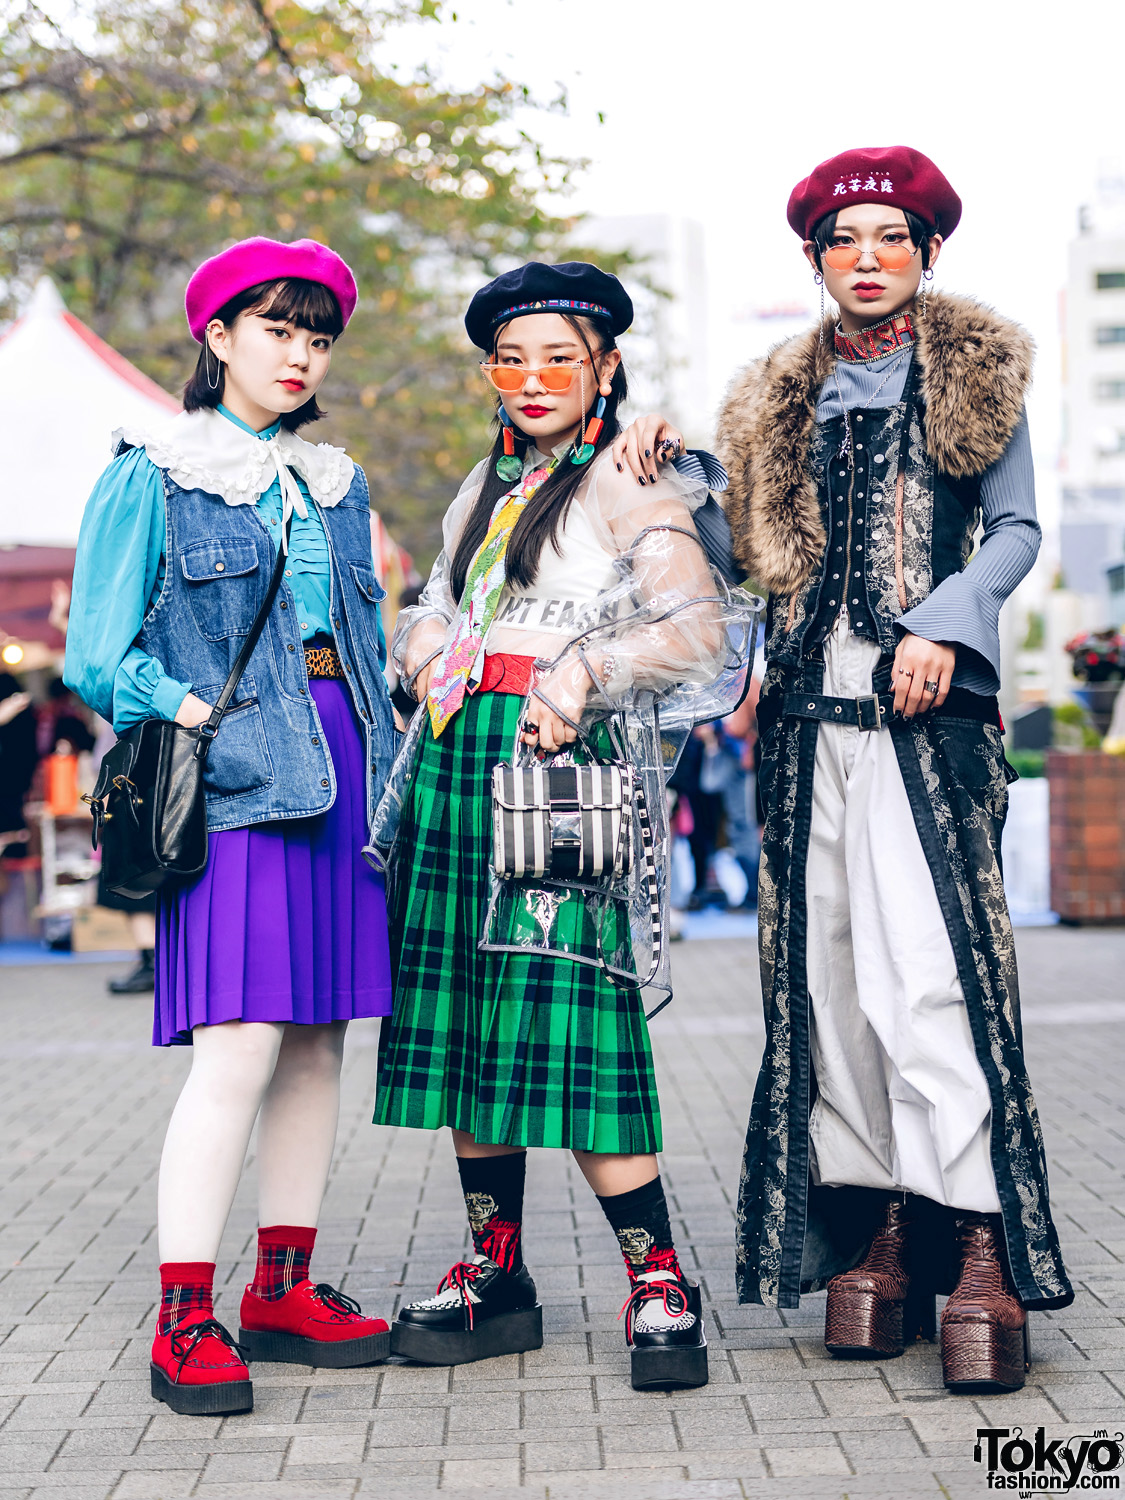 Japanese Teens in Vintage Street Styles w/ Yosuke, Gallerie, Spinns, WEGO, Ozz Croce & Diminish